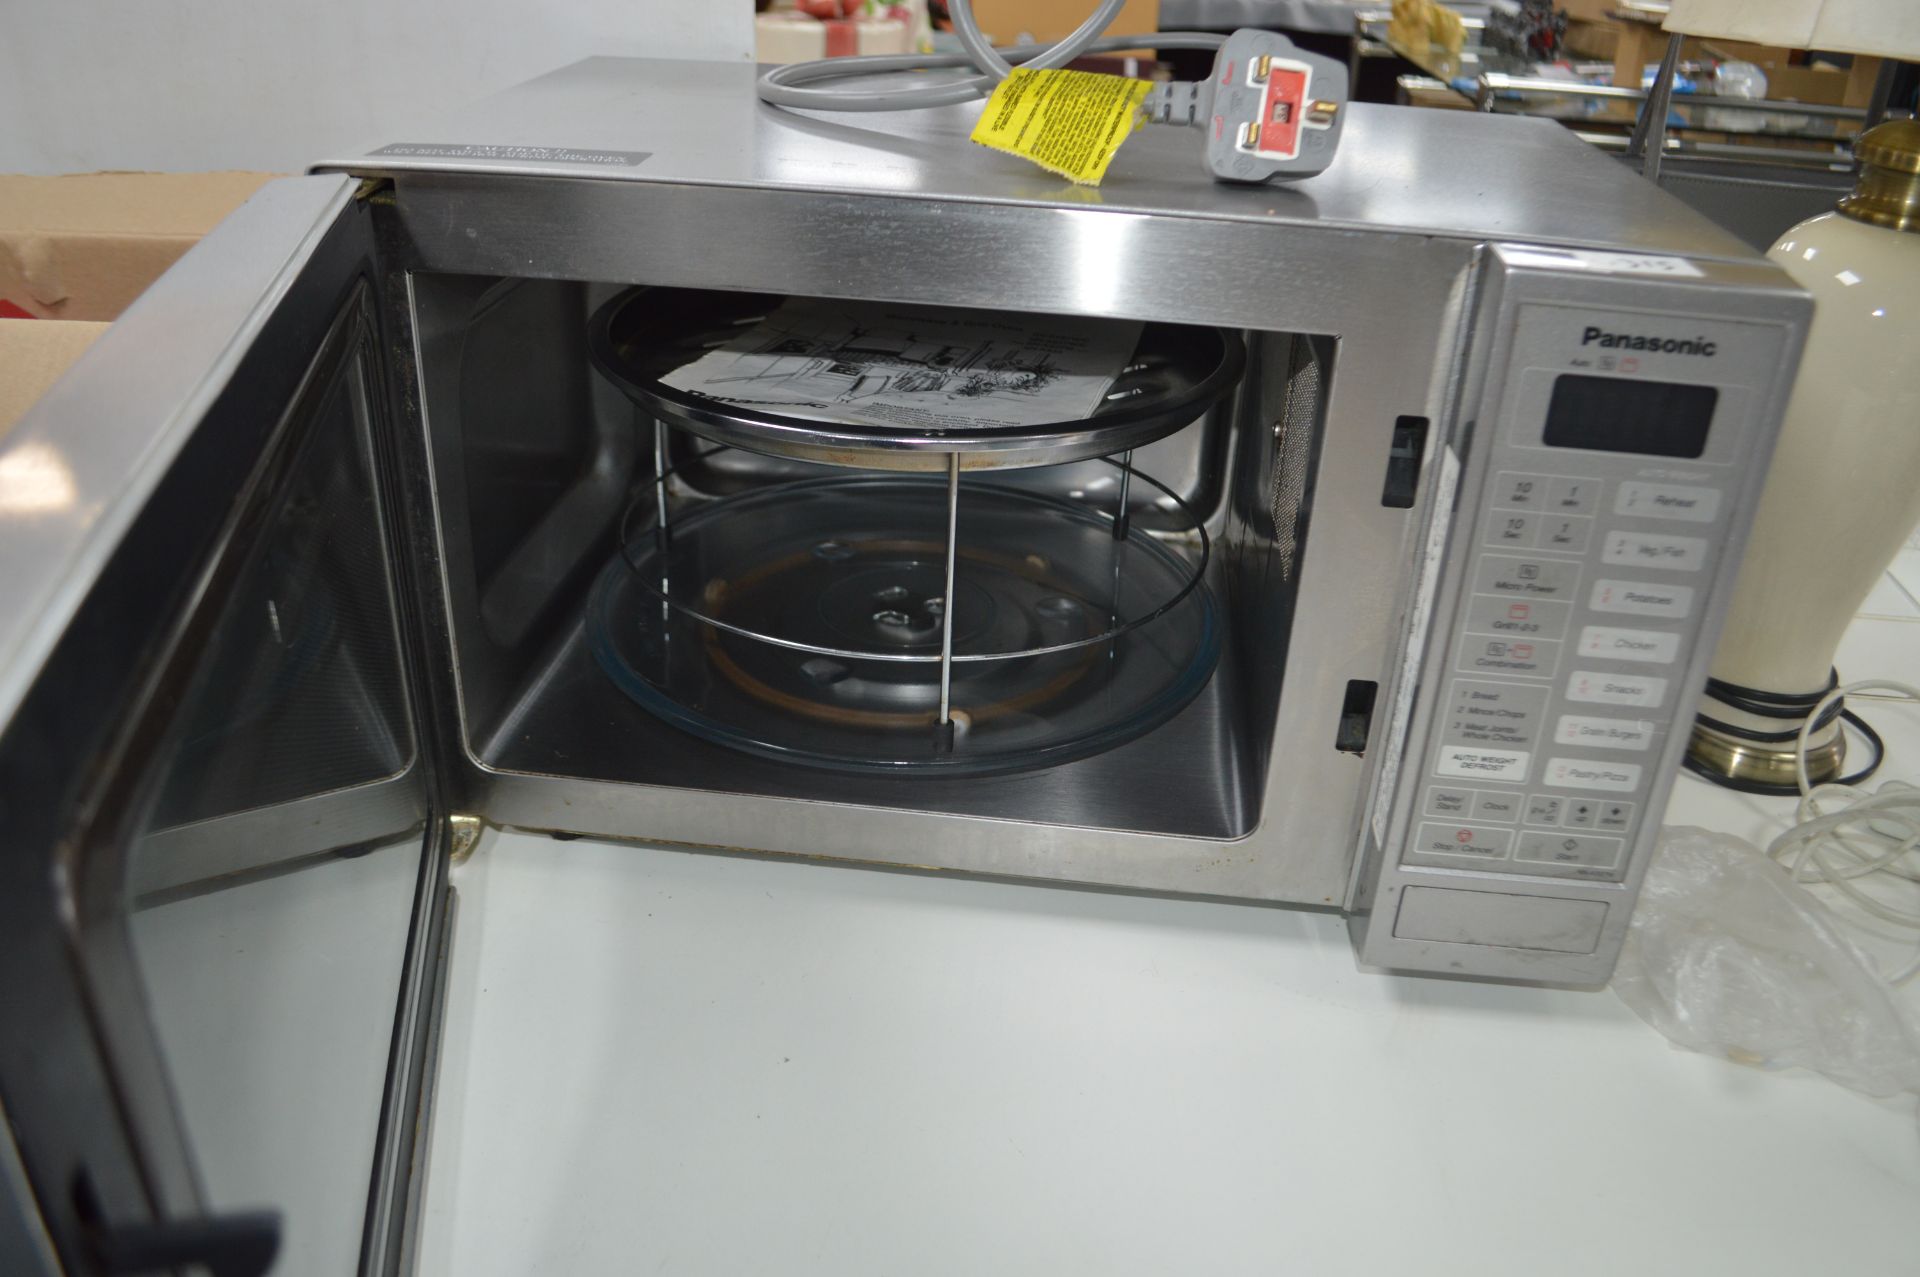 Panasonic Microwave Oven - Image 2 of 2